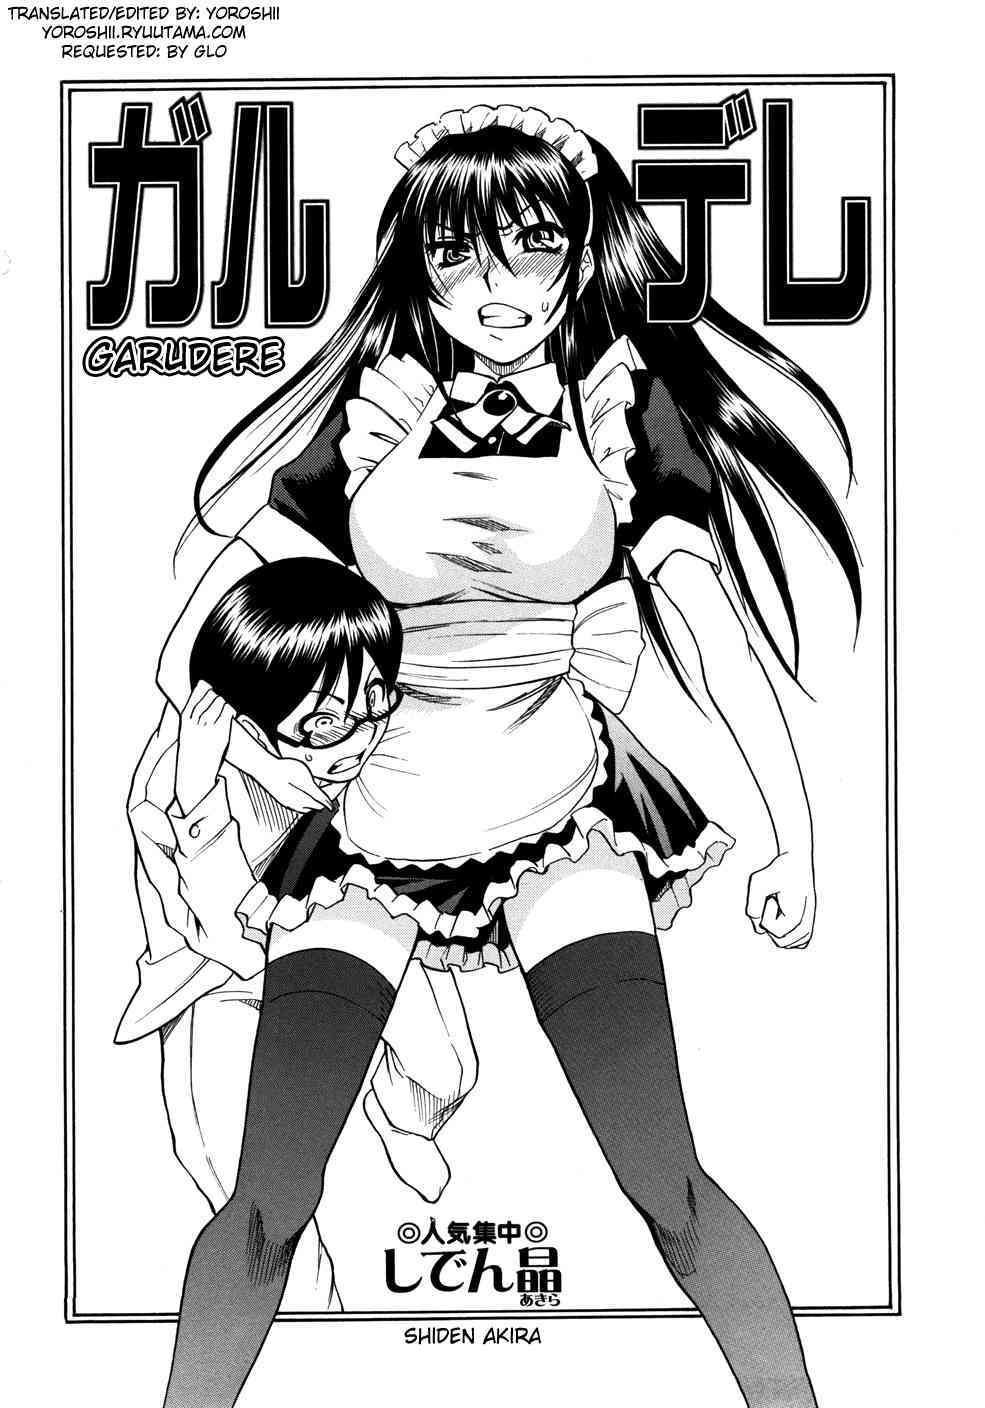 Hentai Manga Comic-Garudere-Read-1